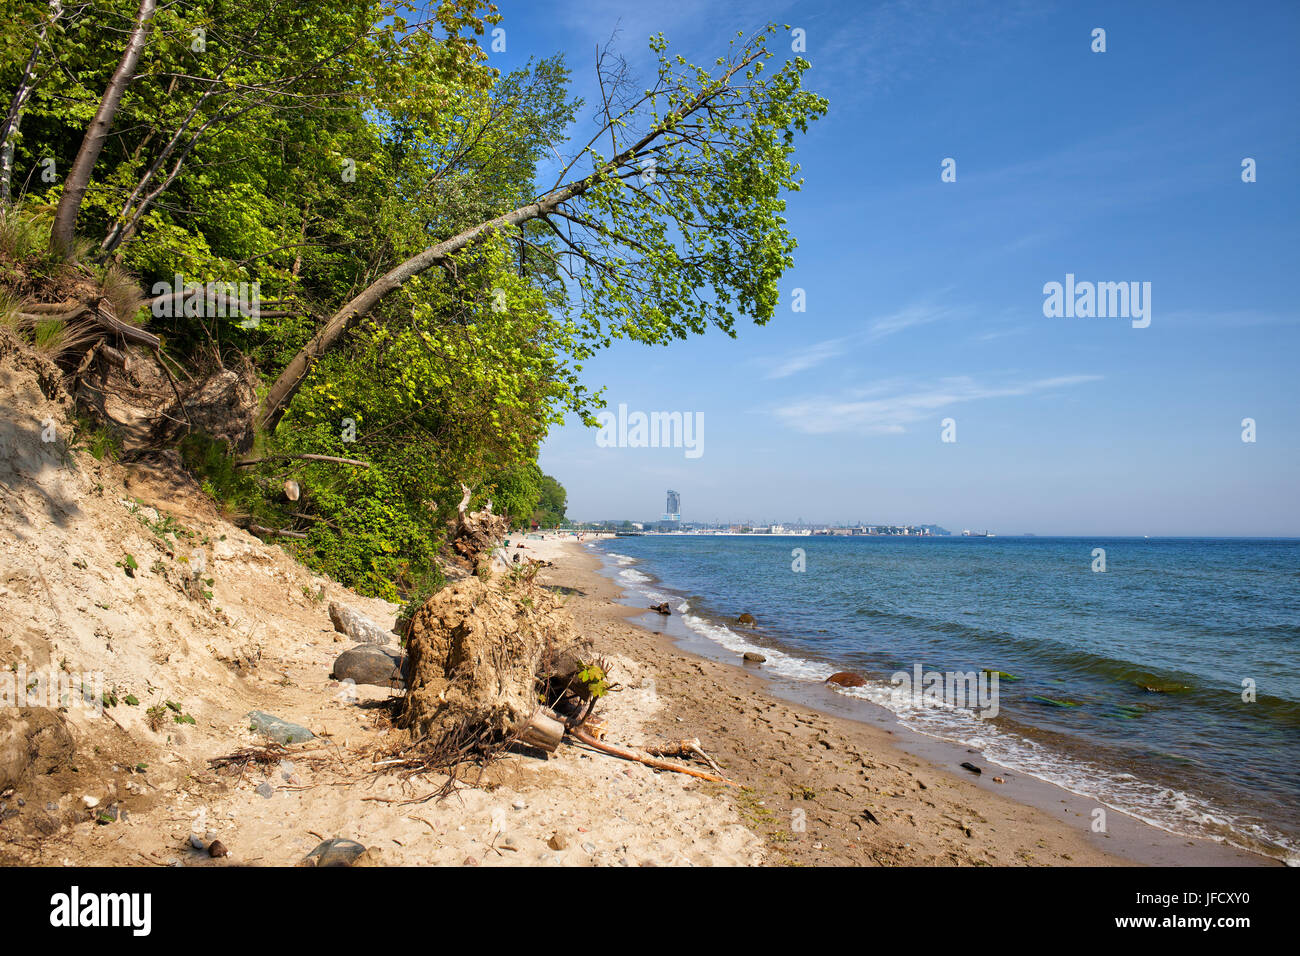 Gdynia in Polen, wilden Strand an der Ostsee, Kepa Redlowska Naturreservat. Stockfoto